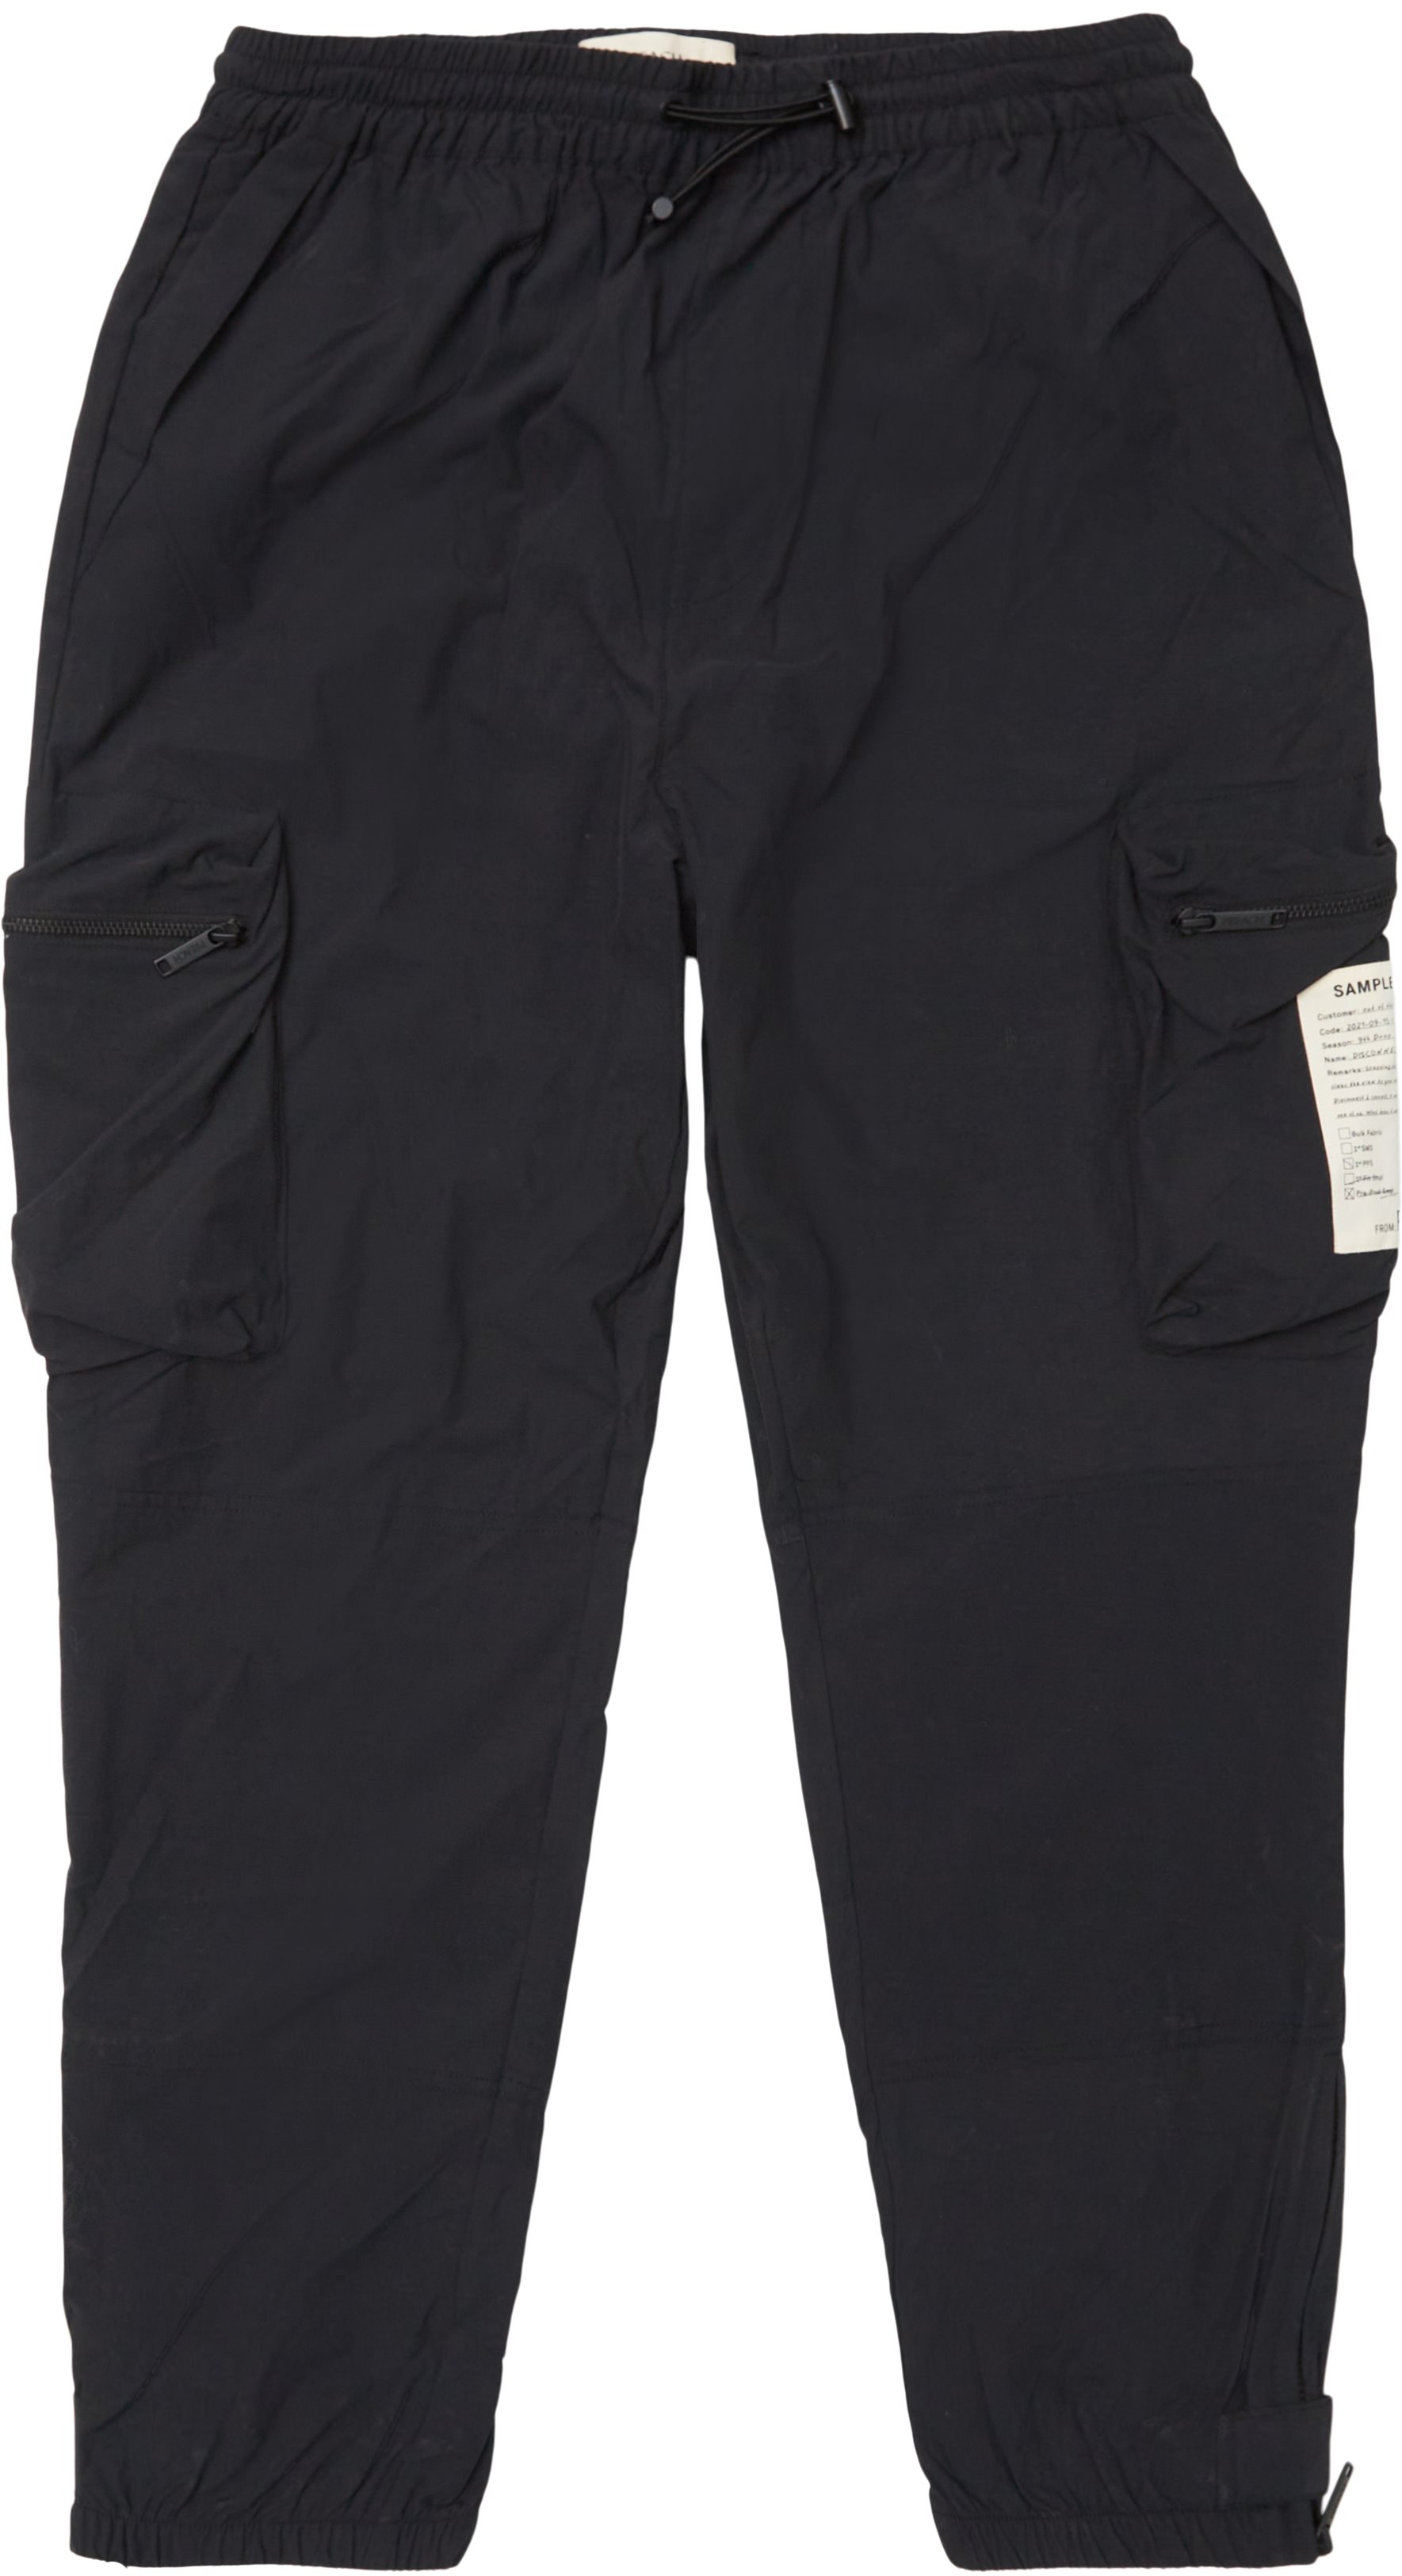 Zip Pants 206091 - Bukser - Loose fit - Sort